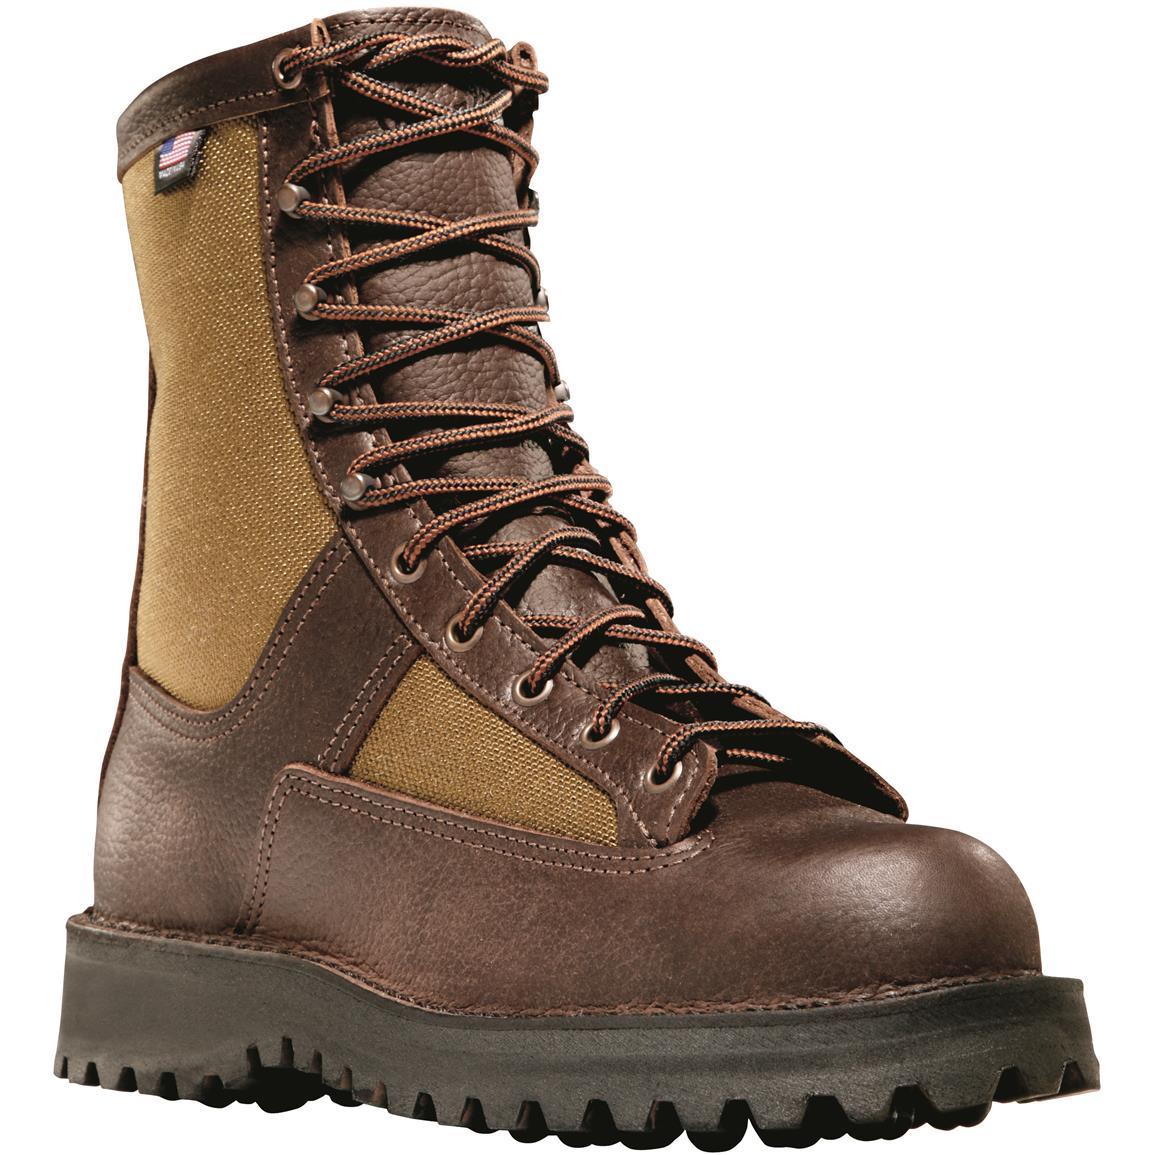 Danner Grouse Men's 8" Waterproof Hunting Boots, Brown